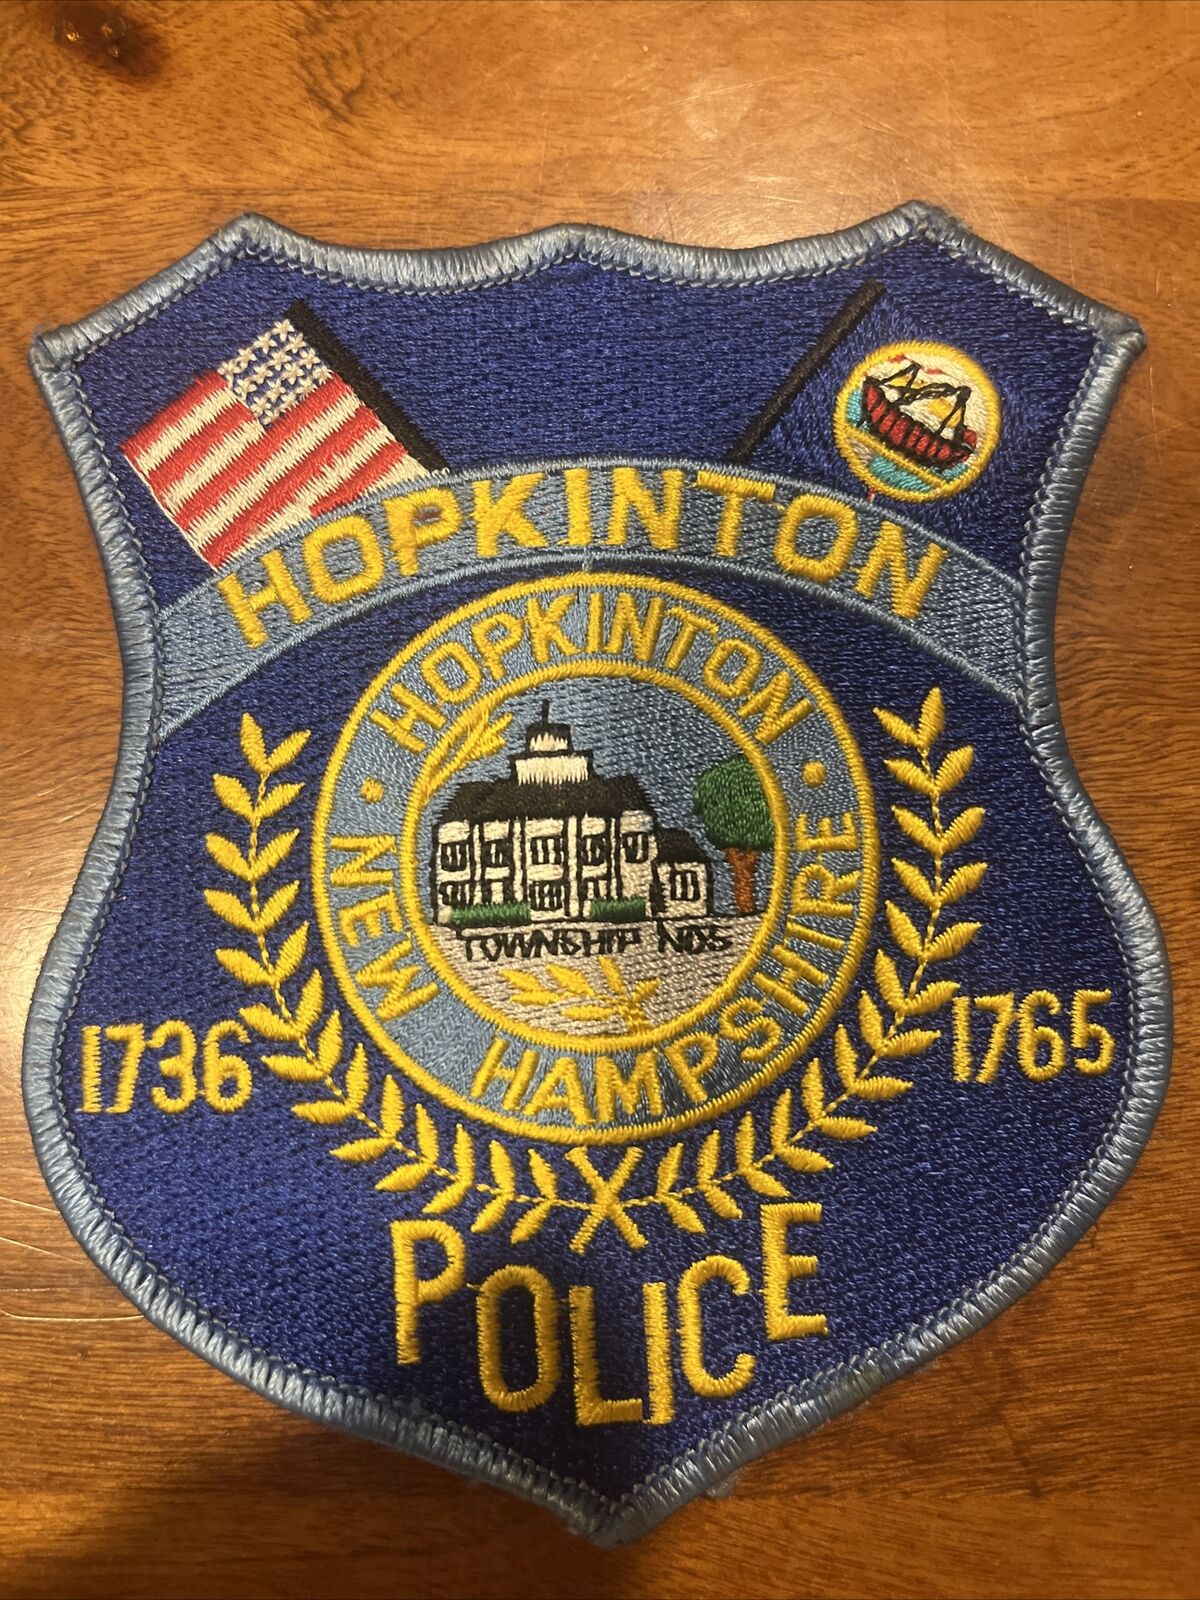 Hopkinton, New Hampshire Police Patch